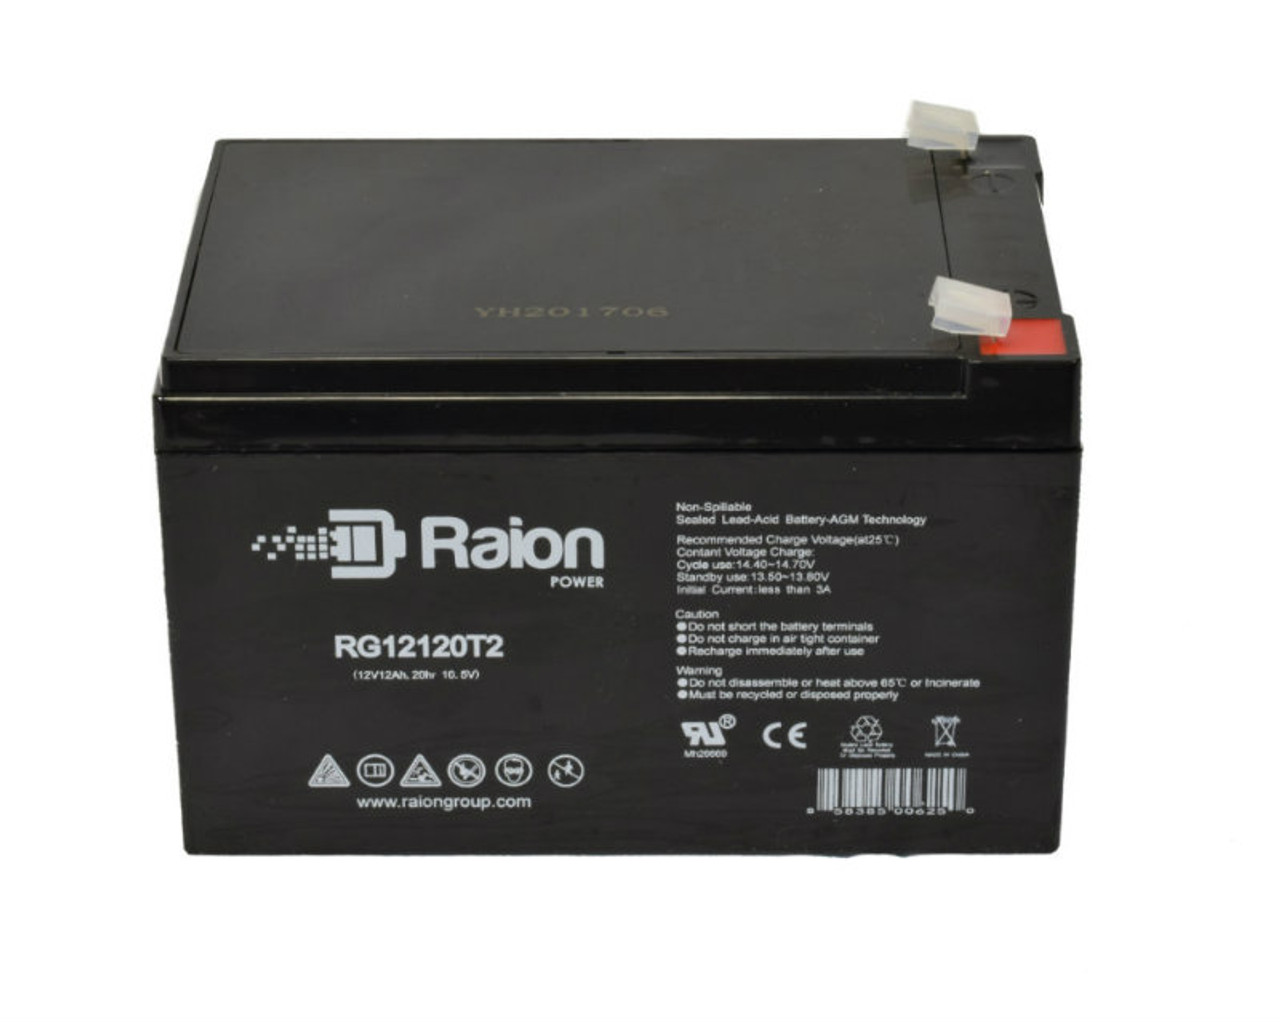 Raion Power RG12120T2 SLA Battery for Mule PM12120